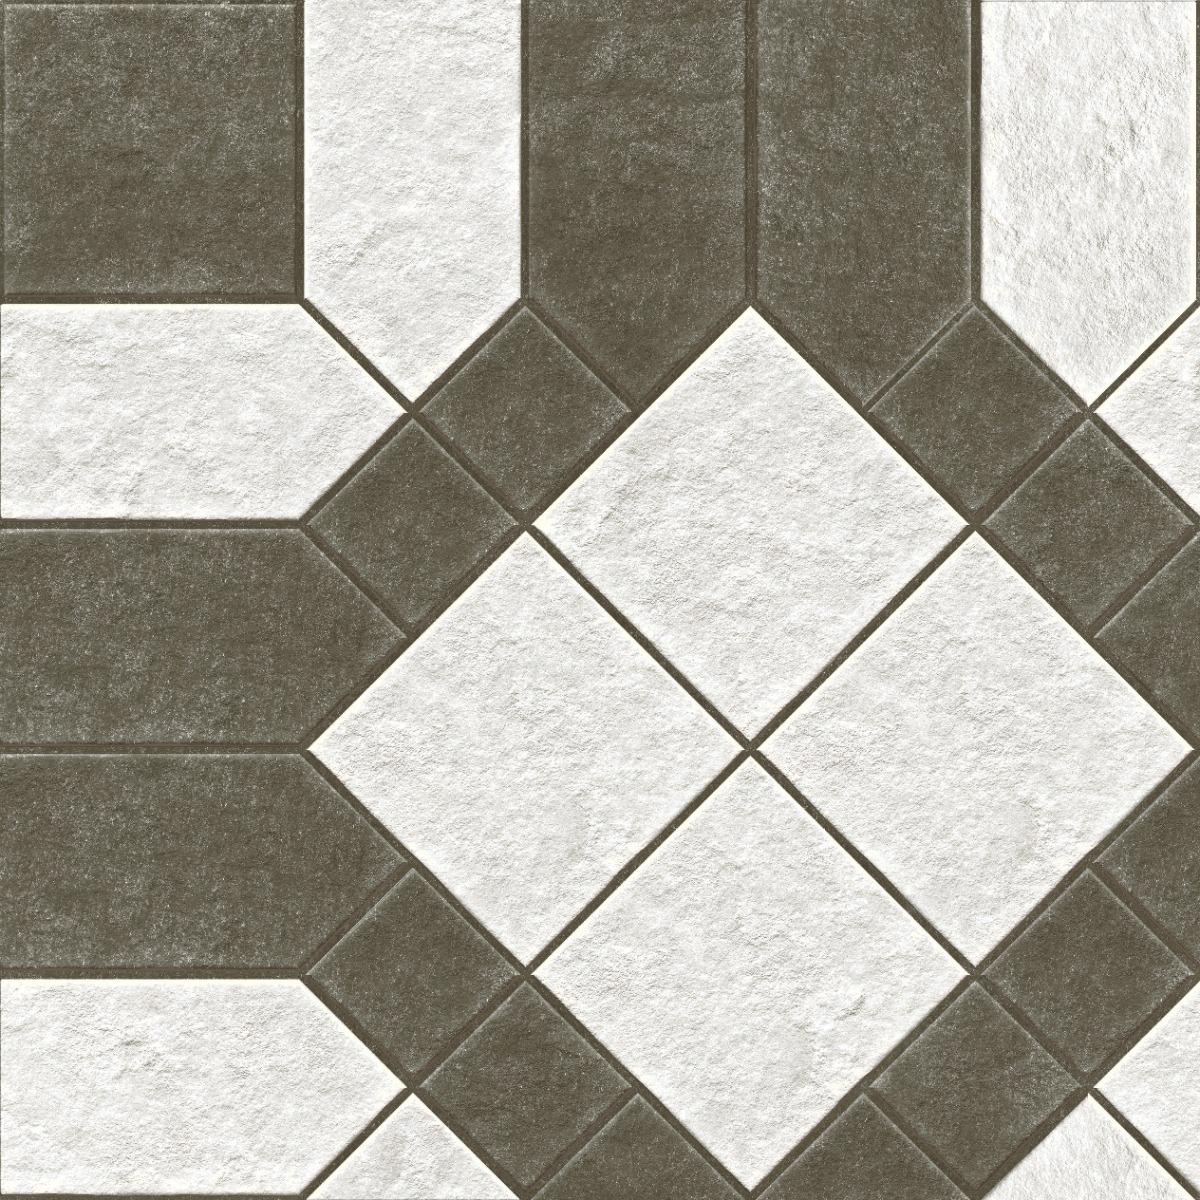 Matte Finish Tiles for Balcony Tiles, Parking Tiles, Terrace Tiles, Pathway Tiles, High Traffic Tiles, Commercial/Office, Outdoor Area